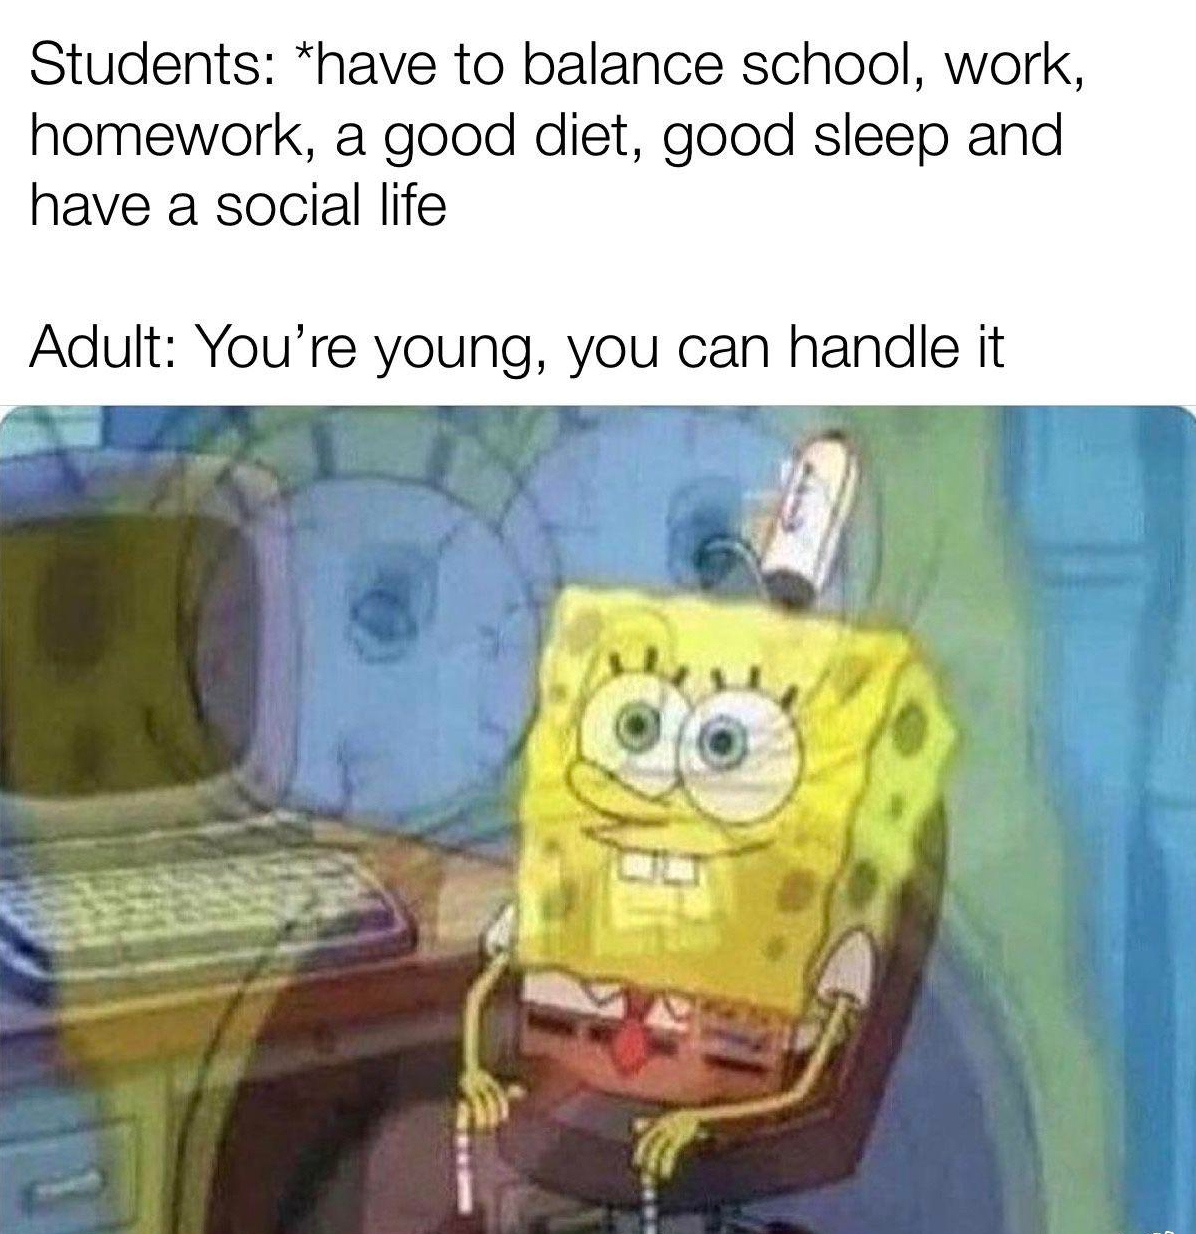 Spongebob themed Trying To Balance Work, School, And Social Life Meme